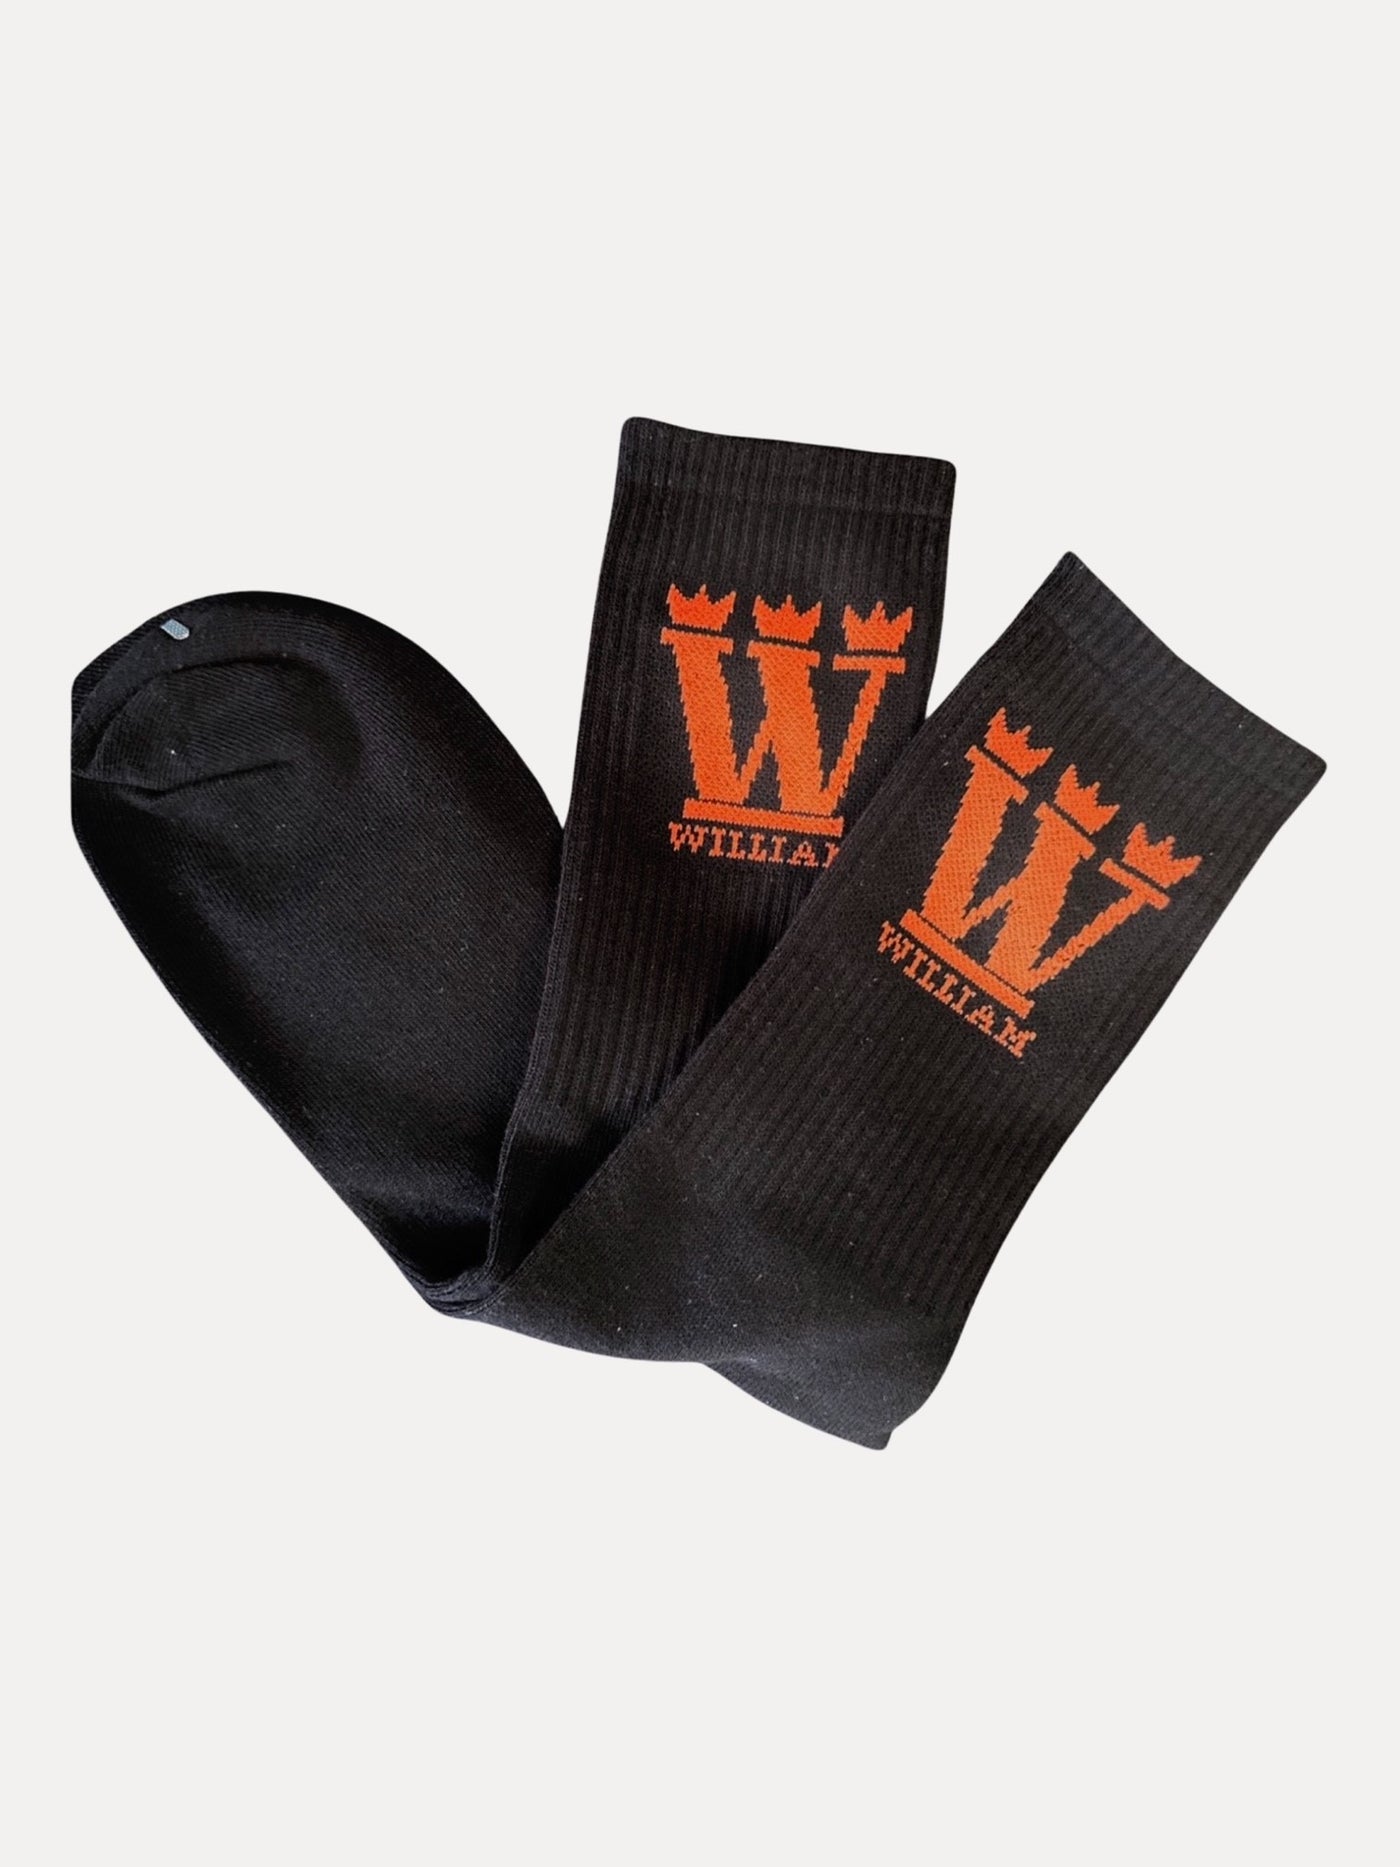 WILLIAM Socks Black - Neon Orange